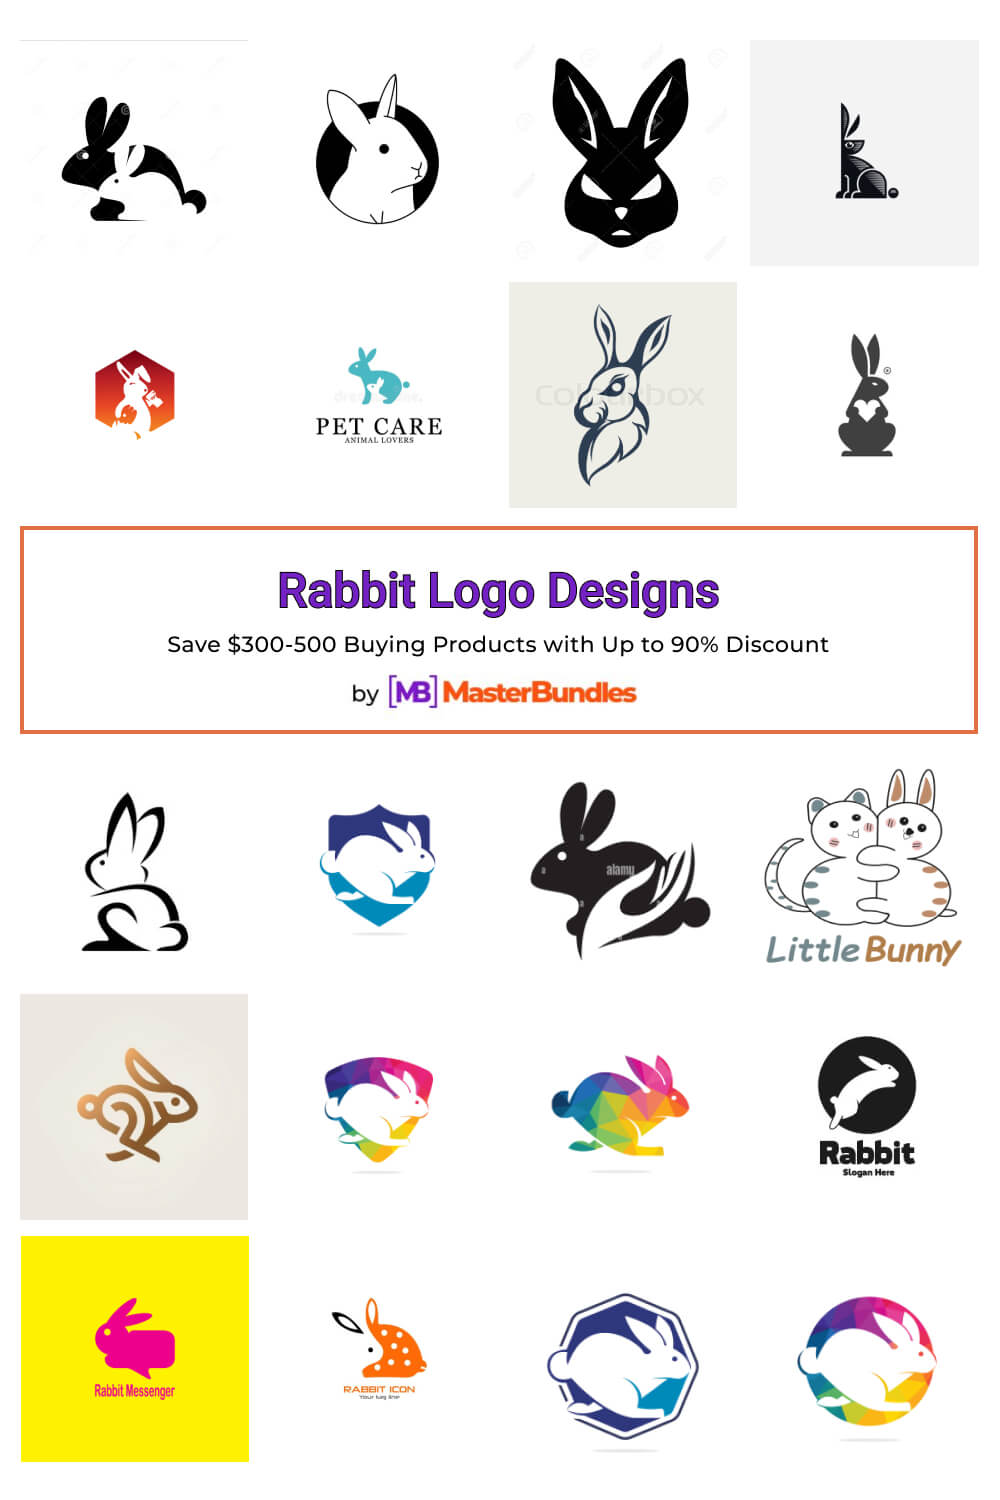 rabbit logo designs pinterest image.